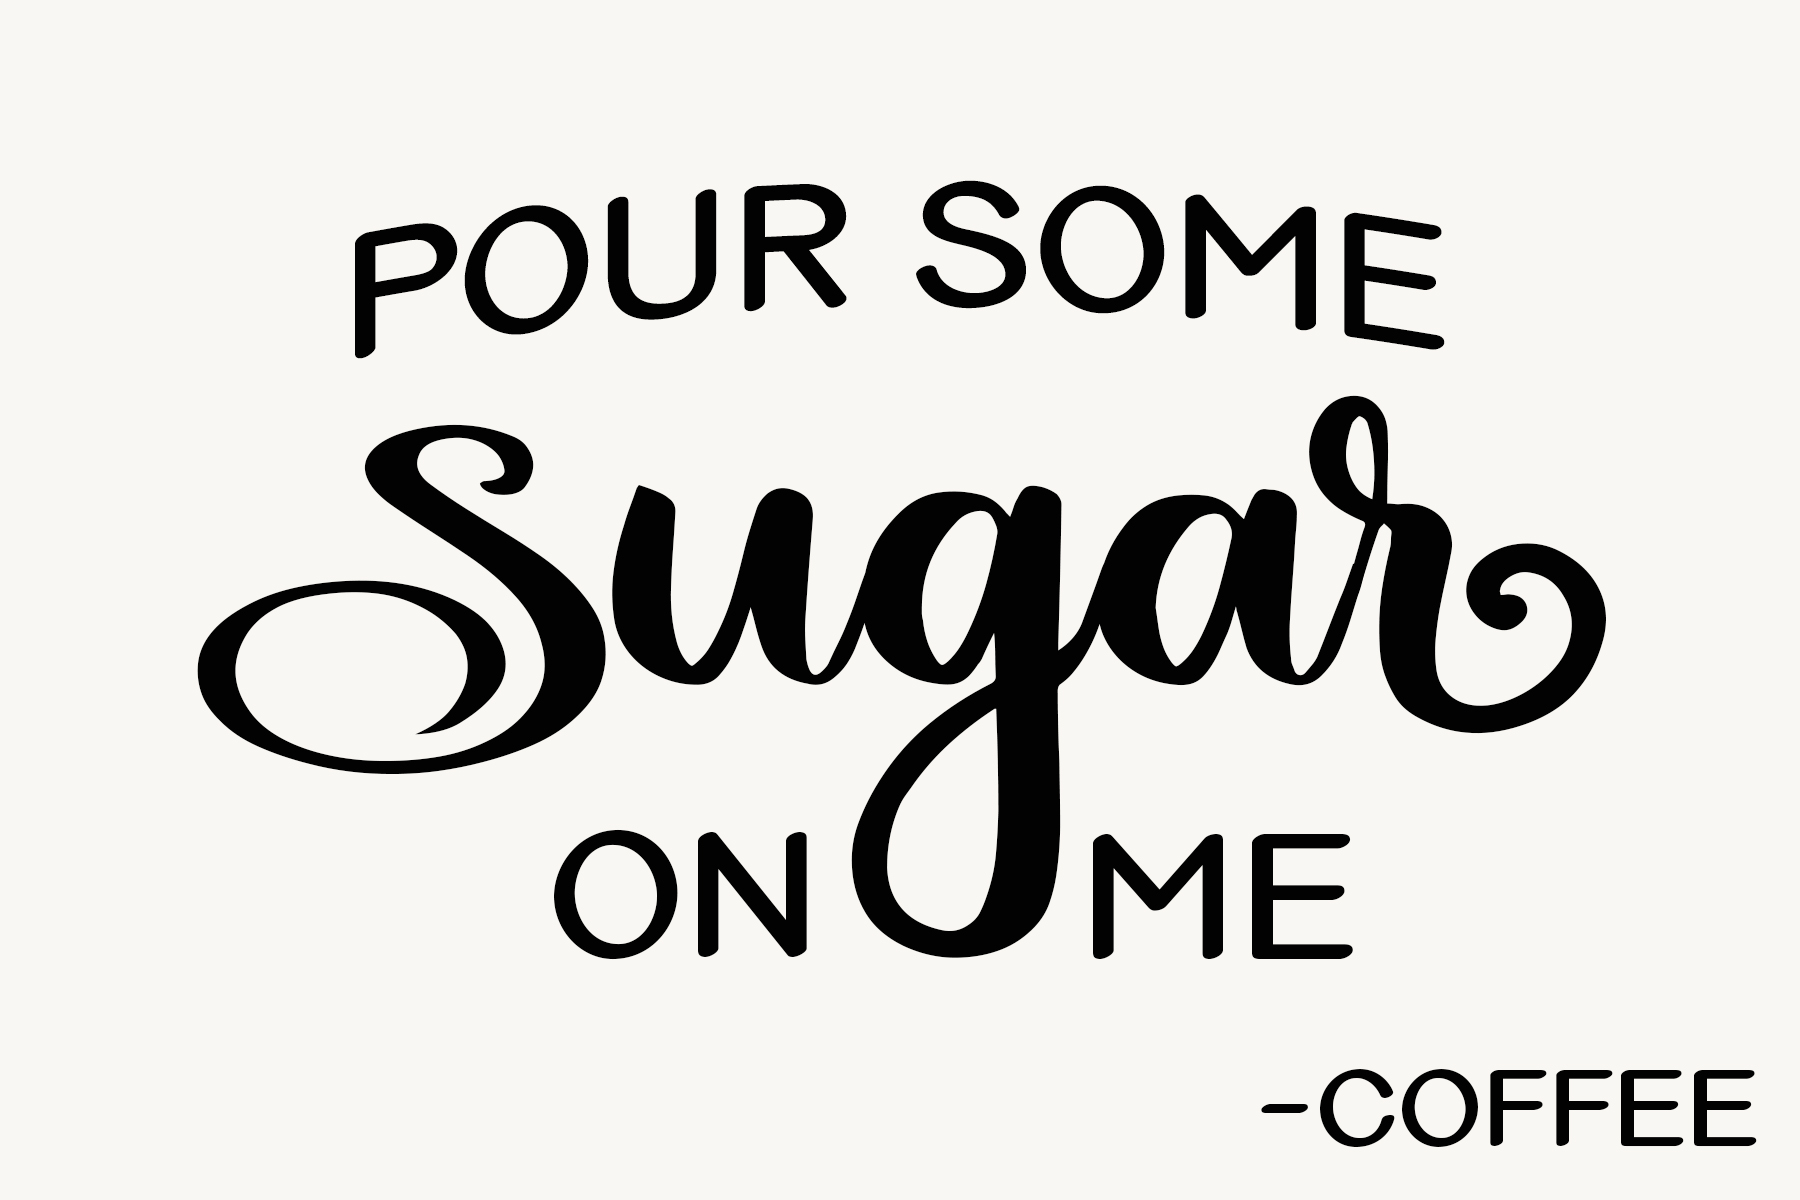 Pour some sugar me